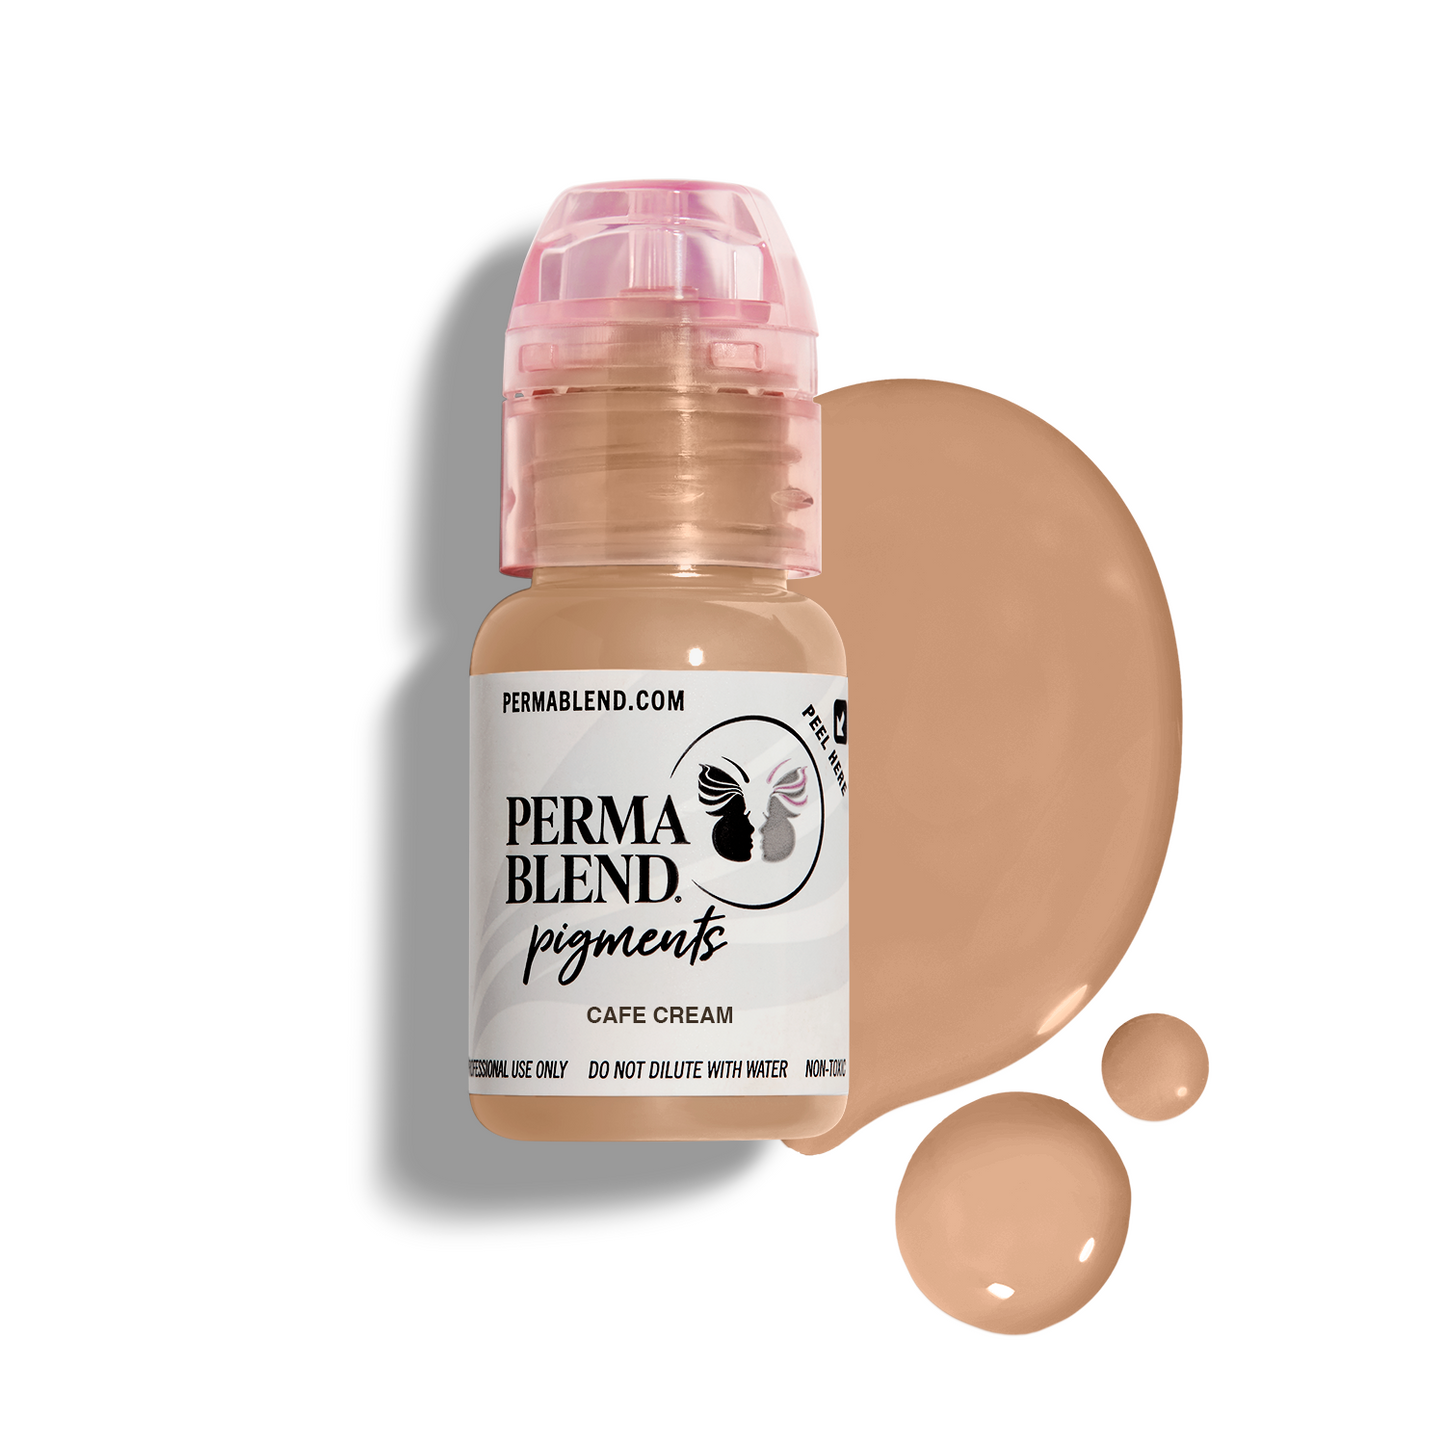 Perma Blend Pigments - Cafe Cream